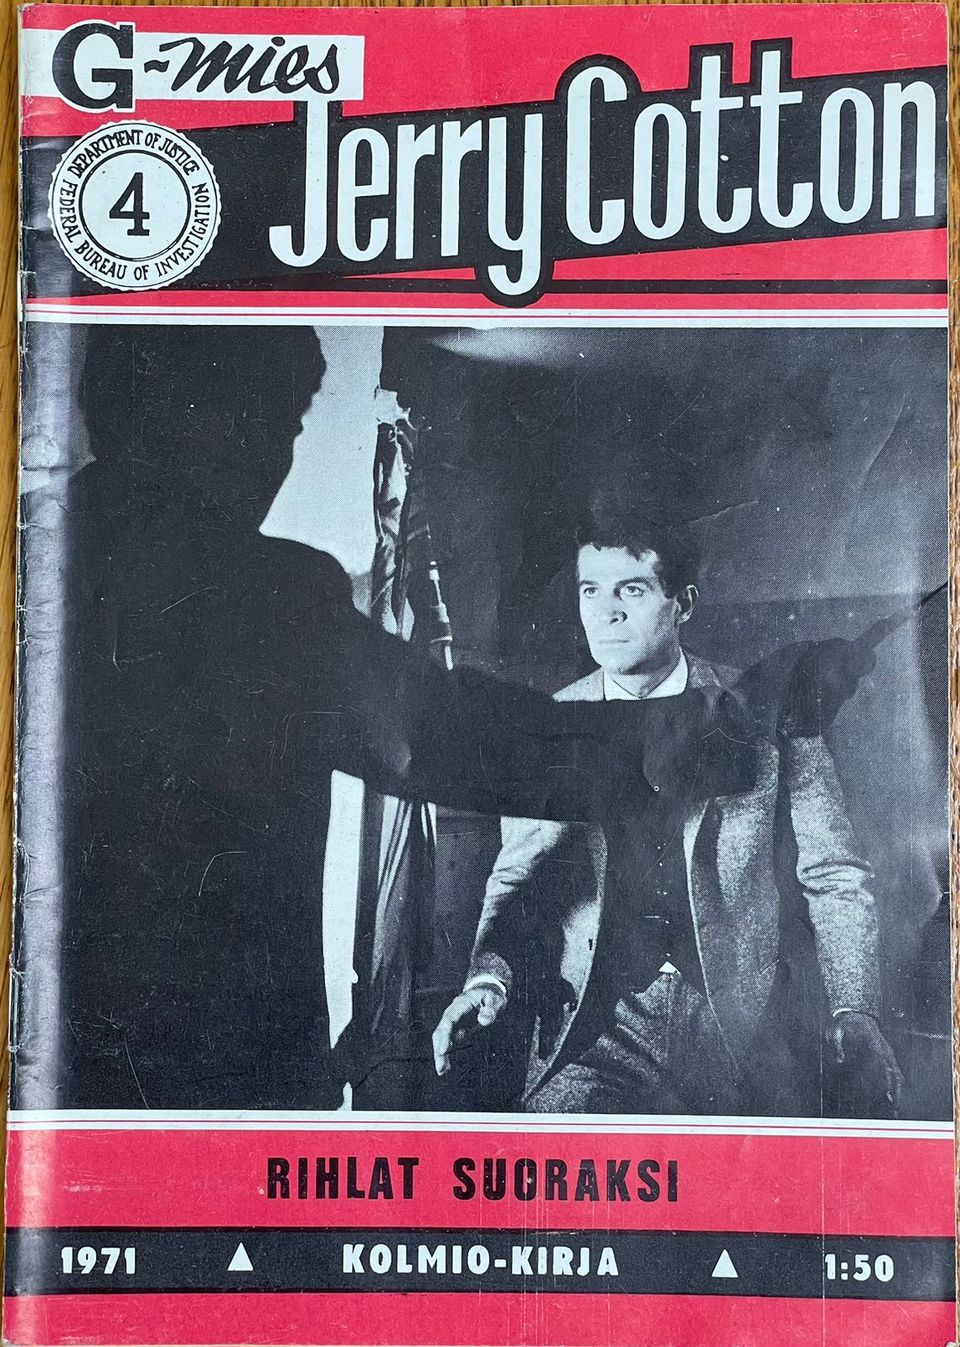 Jerry Cotton 1971-04 - Rihlat suoraksi